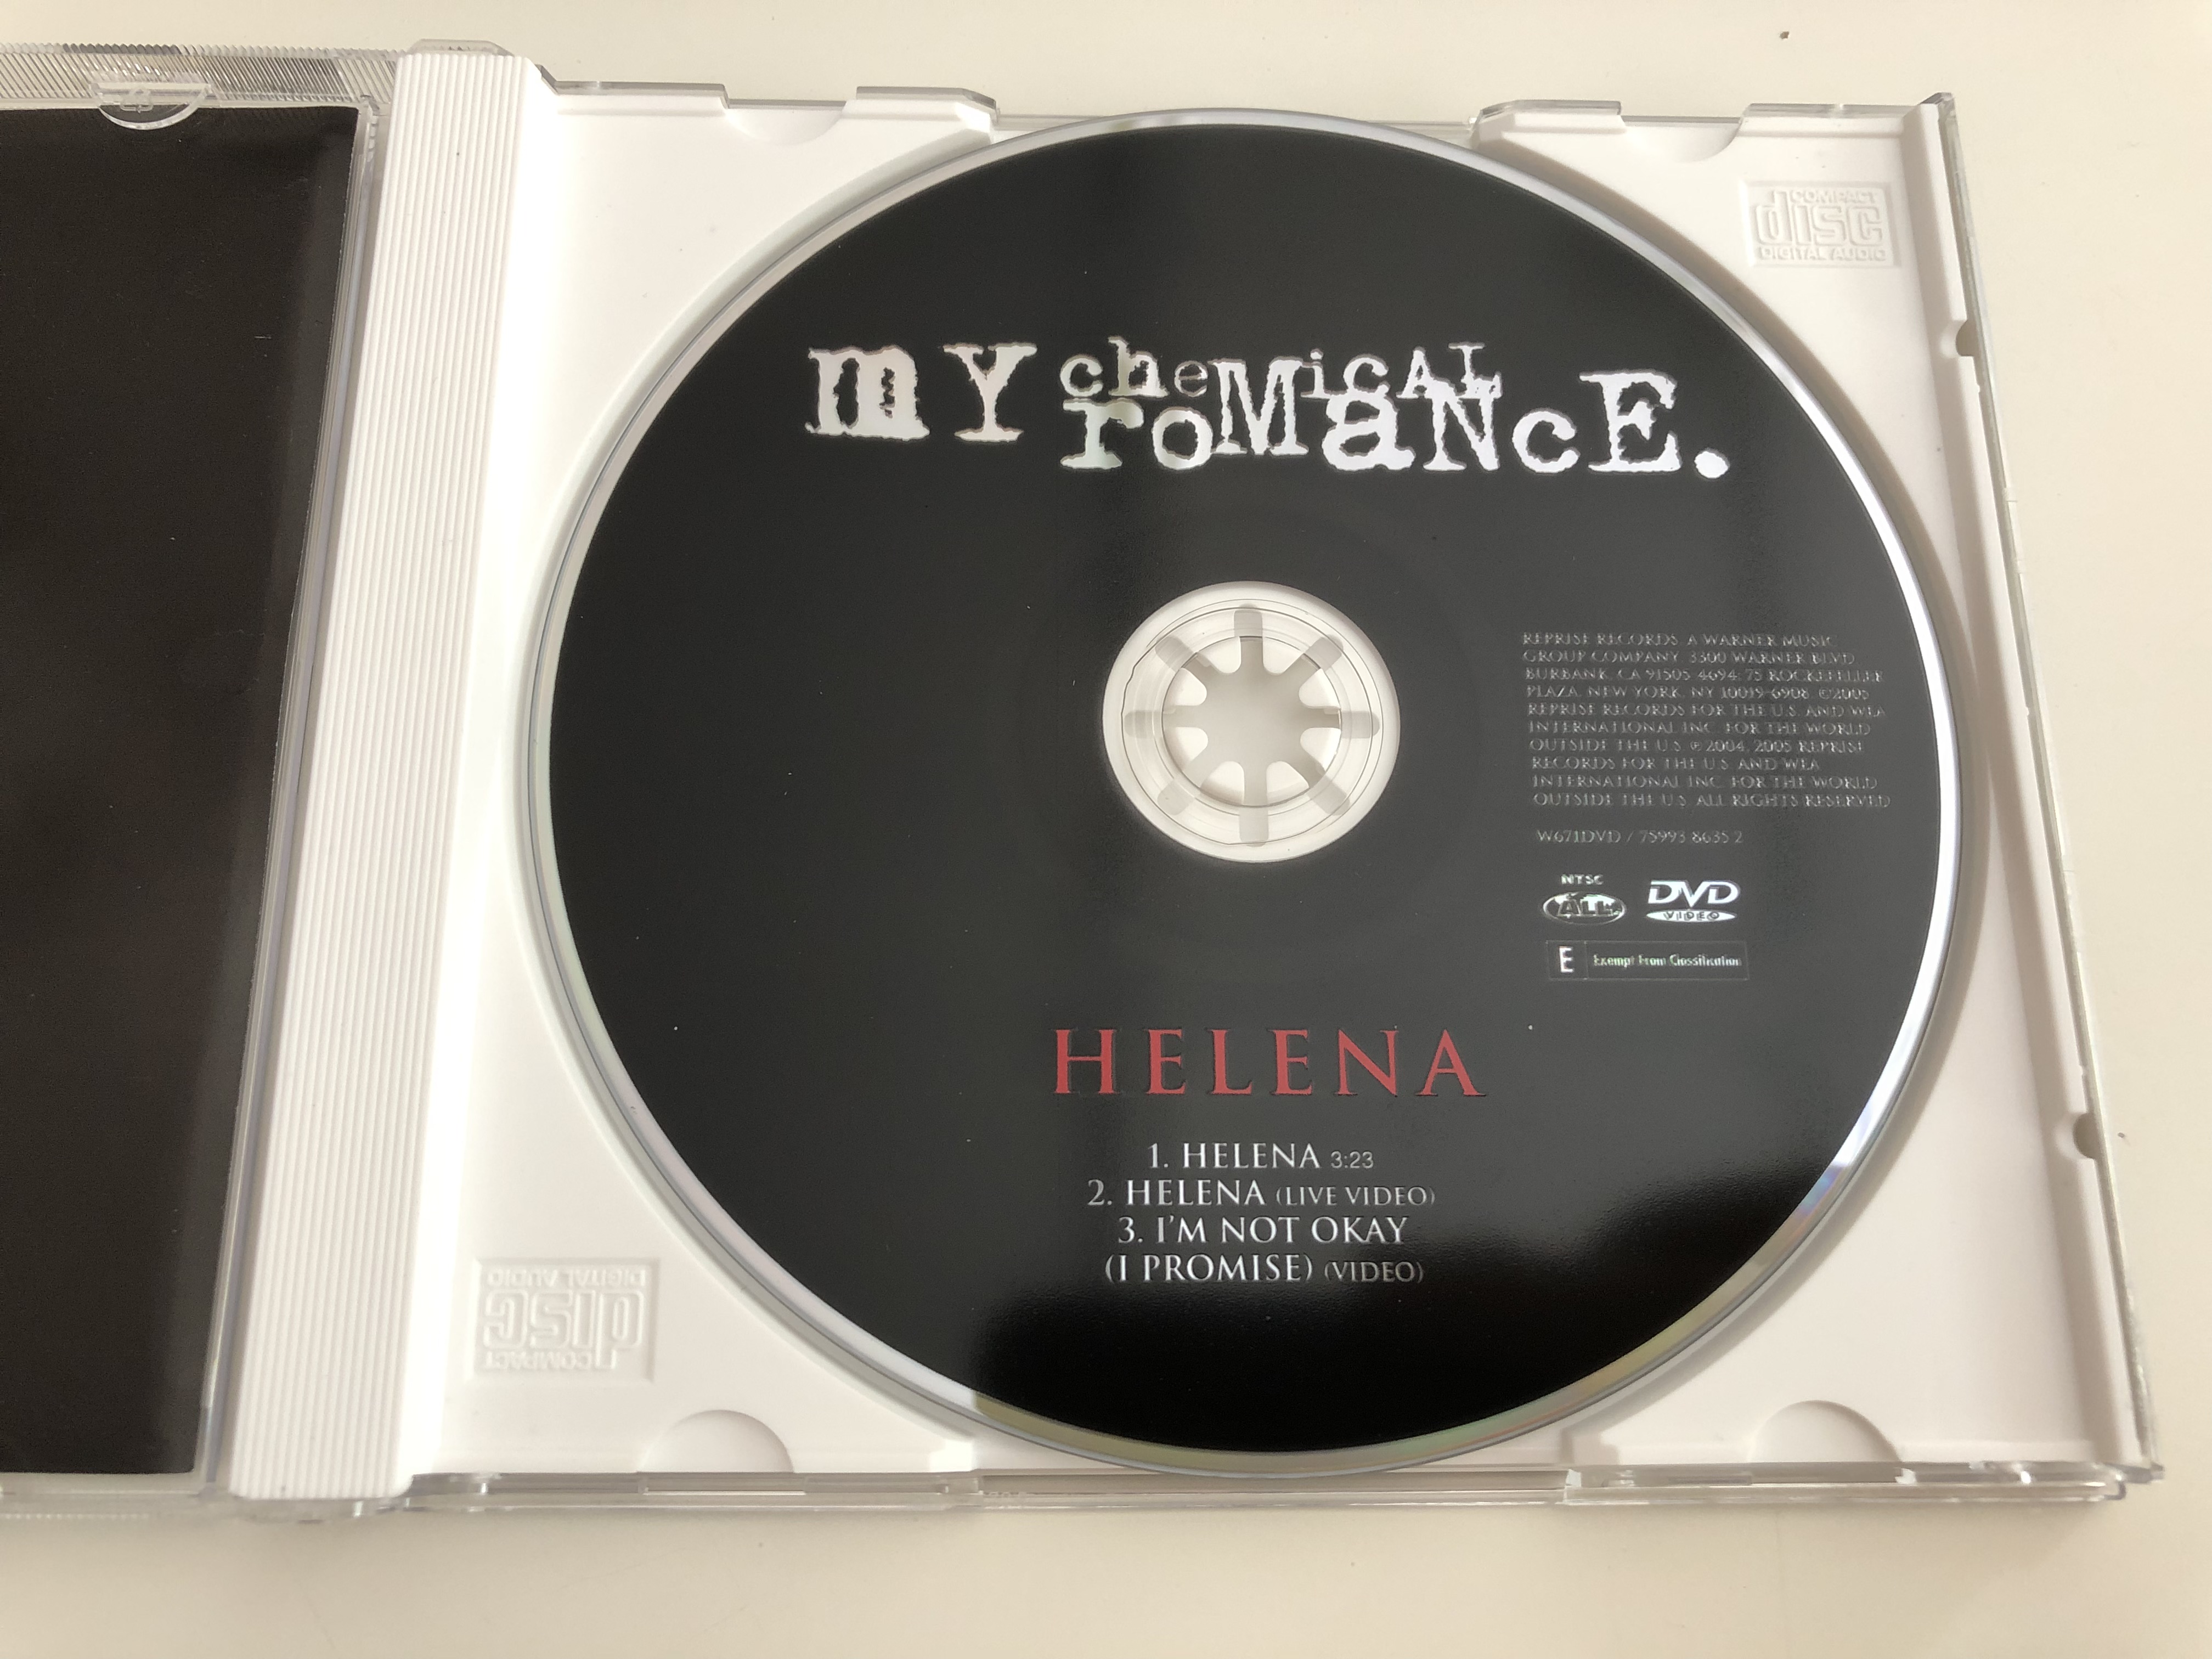 My Chemical Romance - Helena DVD 2005 / W671DVD Reprise Records -  bibleinmylanguage